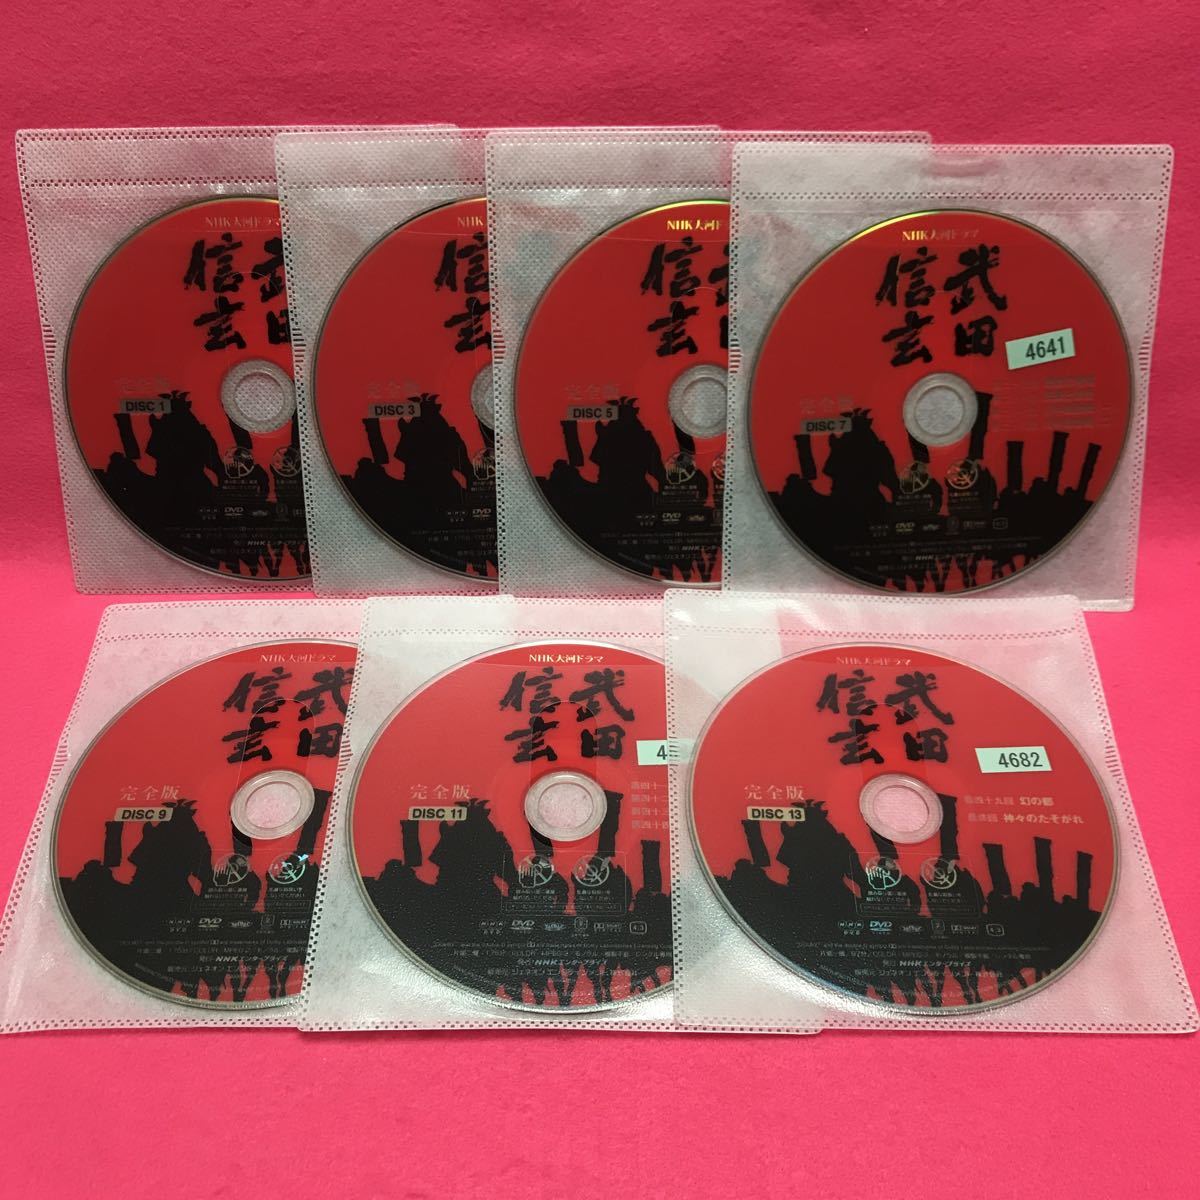 NHK大河ドラマ 武田信玄 完全版 全13巻 レンタル DVD レンタル落ち